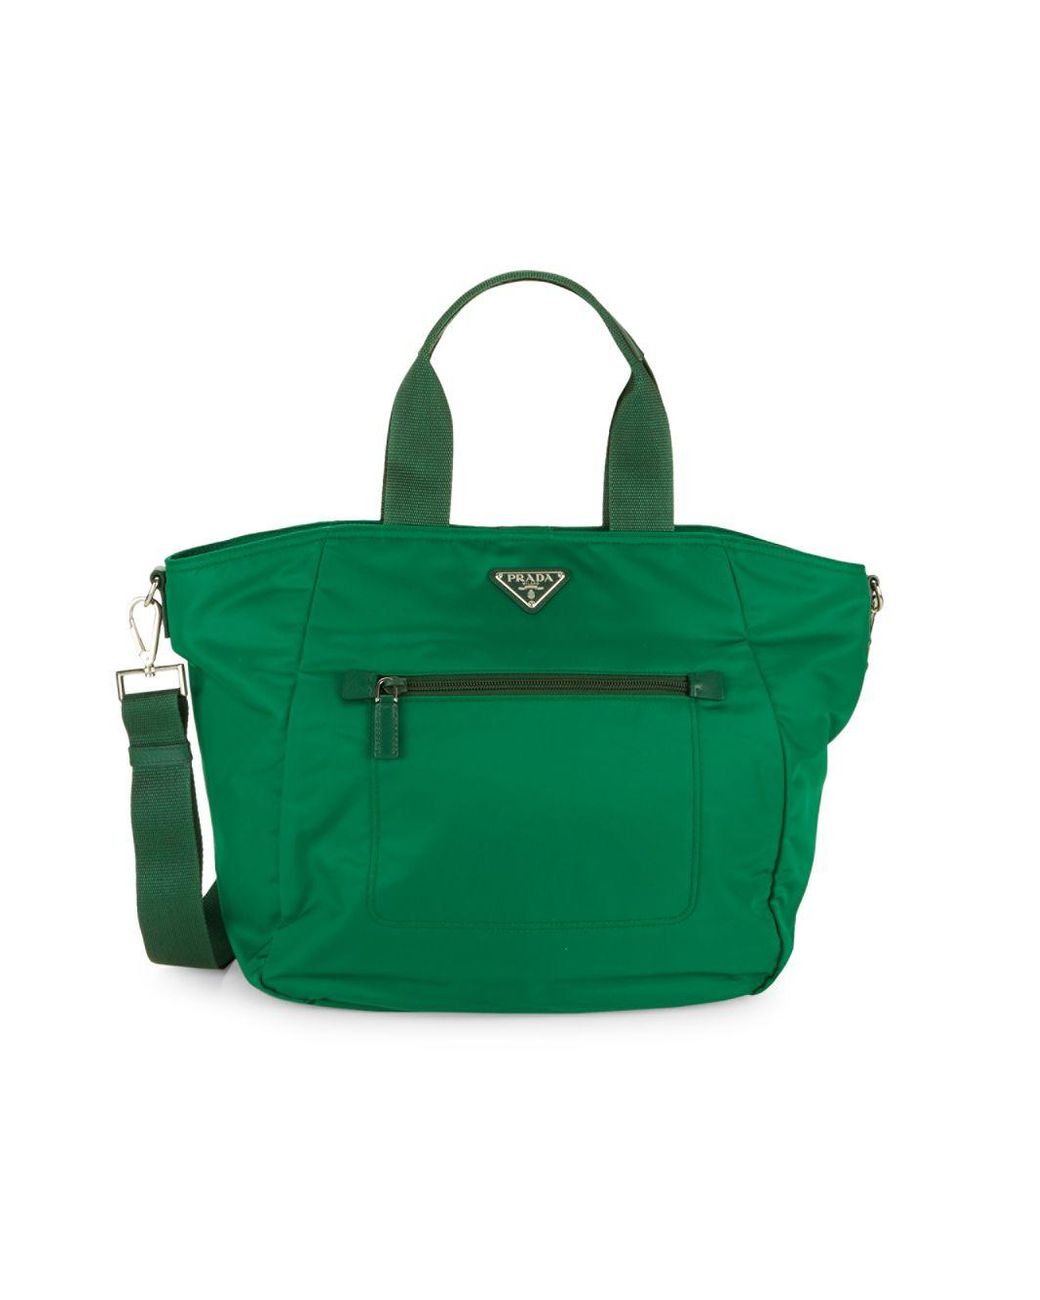 Prada Women's Green Nylon Two-way Tote Bag